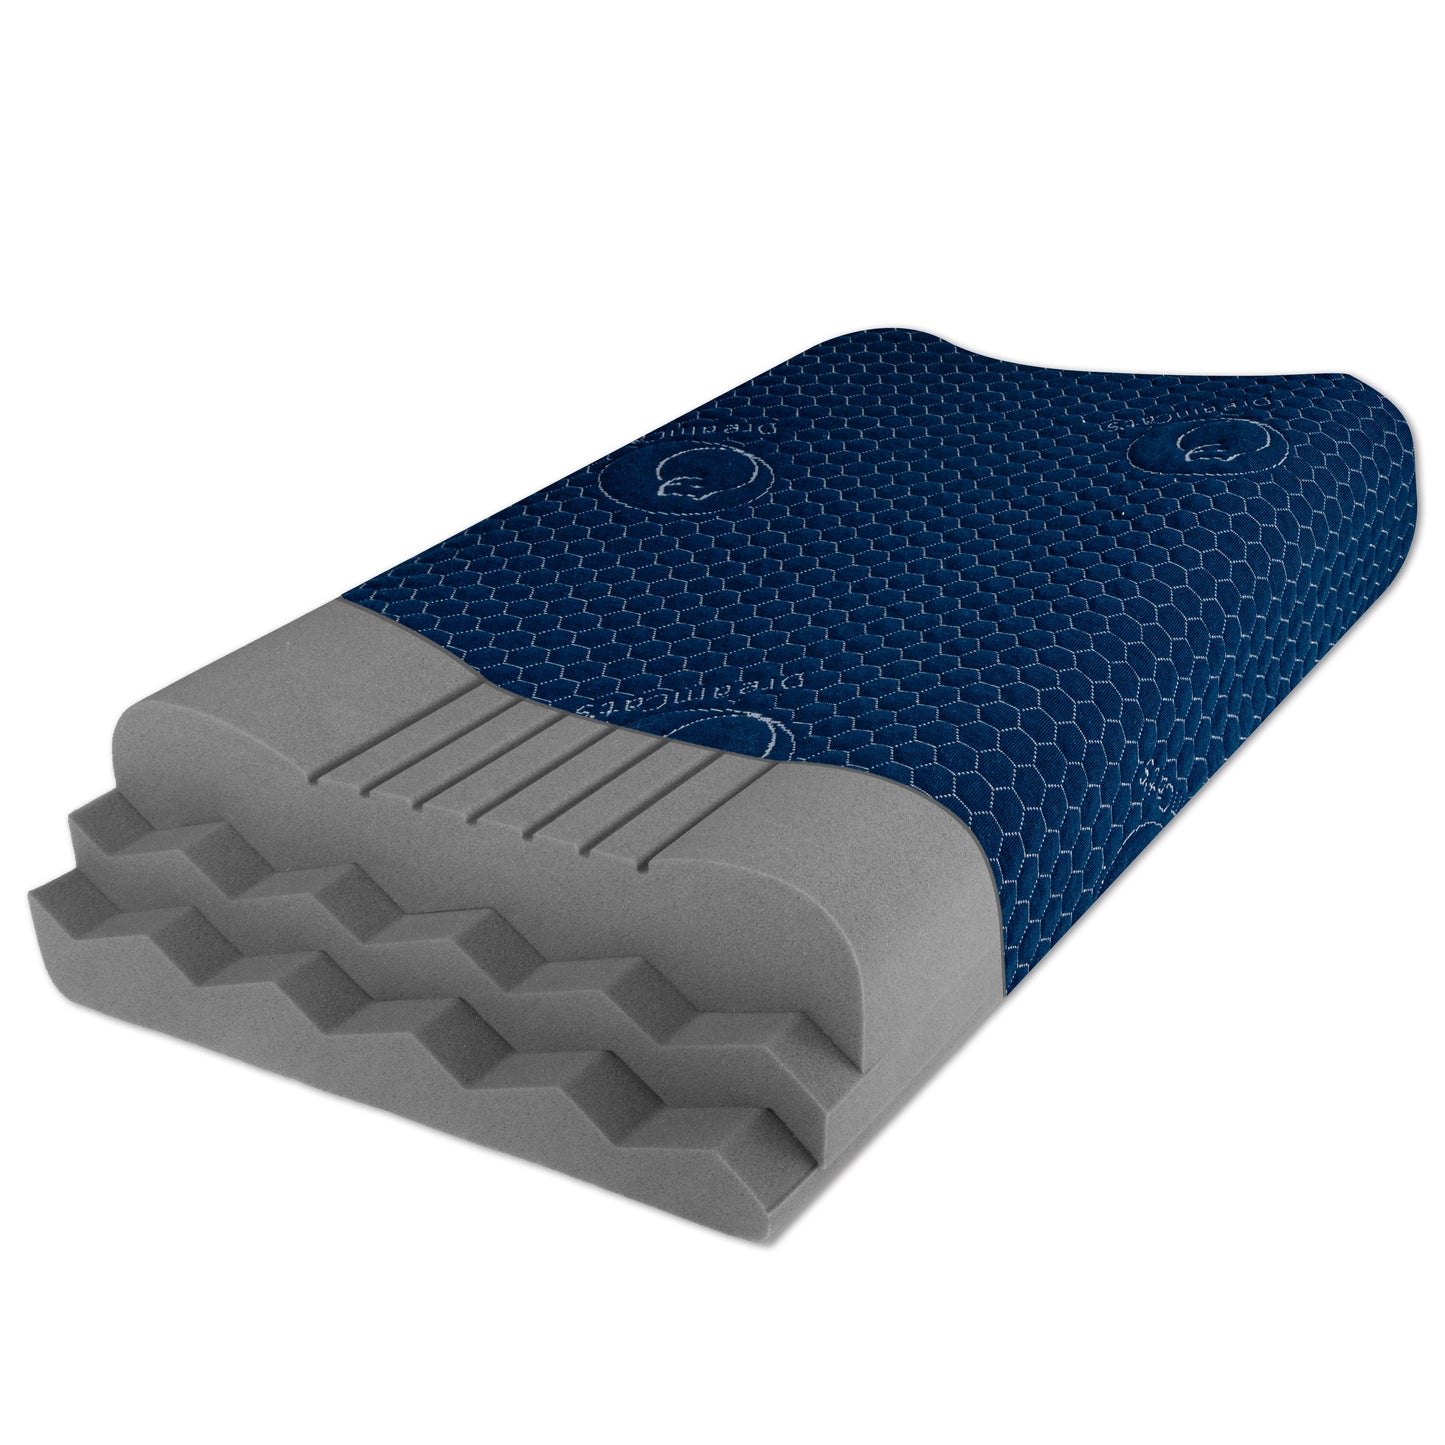 【HILO1】TRIPLE 枕 三層構造 低反発 寝帰りしやすい